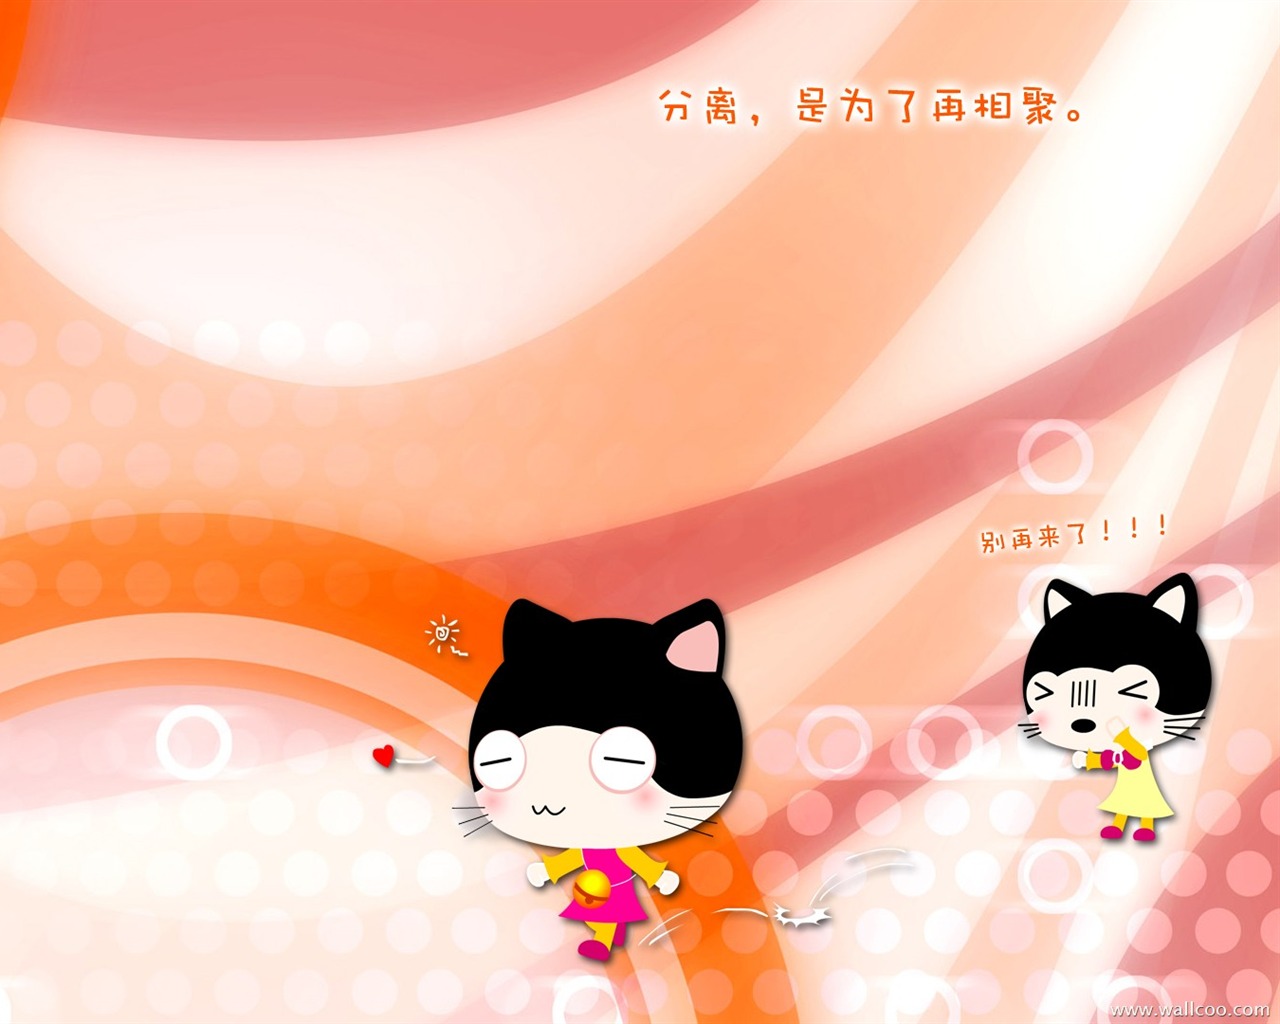 Baby cat cartoon wallpaper (1) #14 - 1280x1024